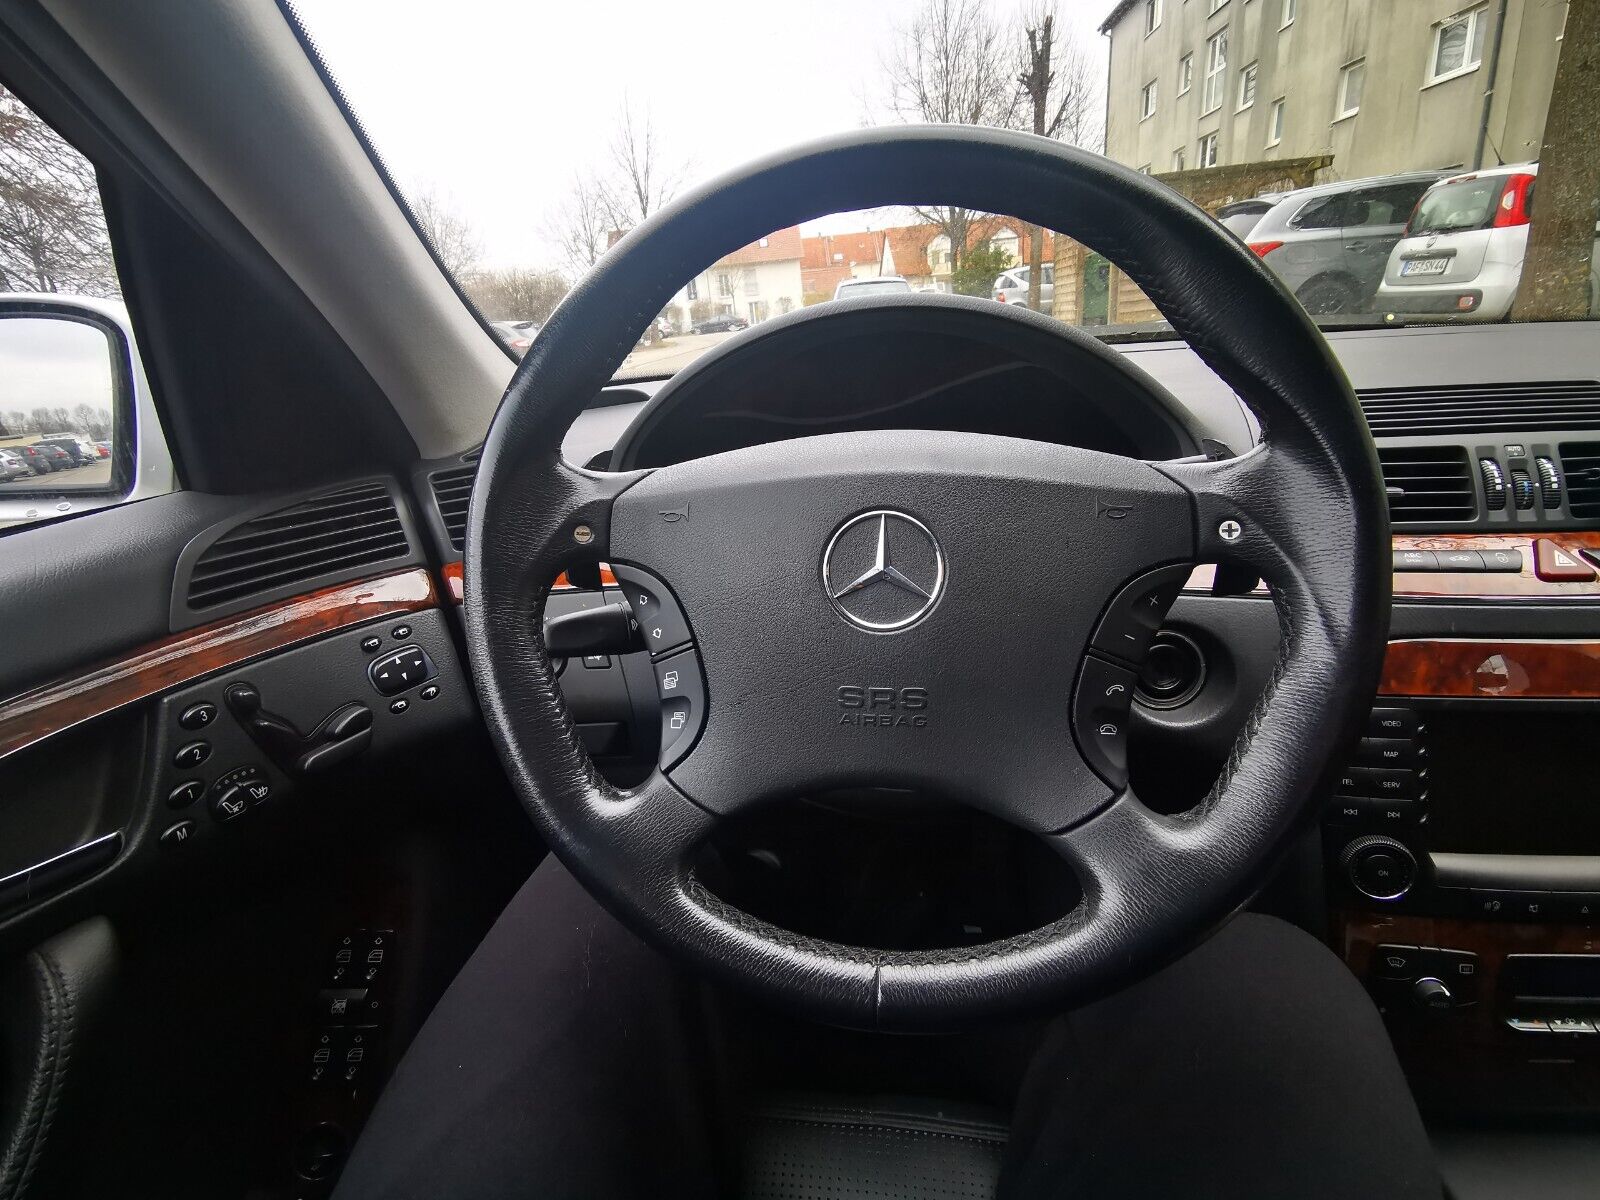 Mercedes Benz W220 W211 S211 Shift Paddles S55 AMG E55 AMG 